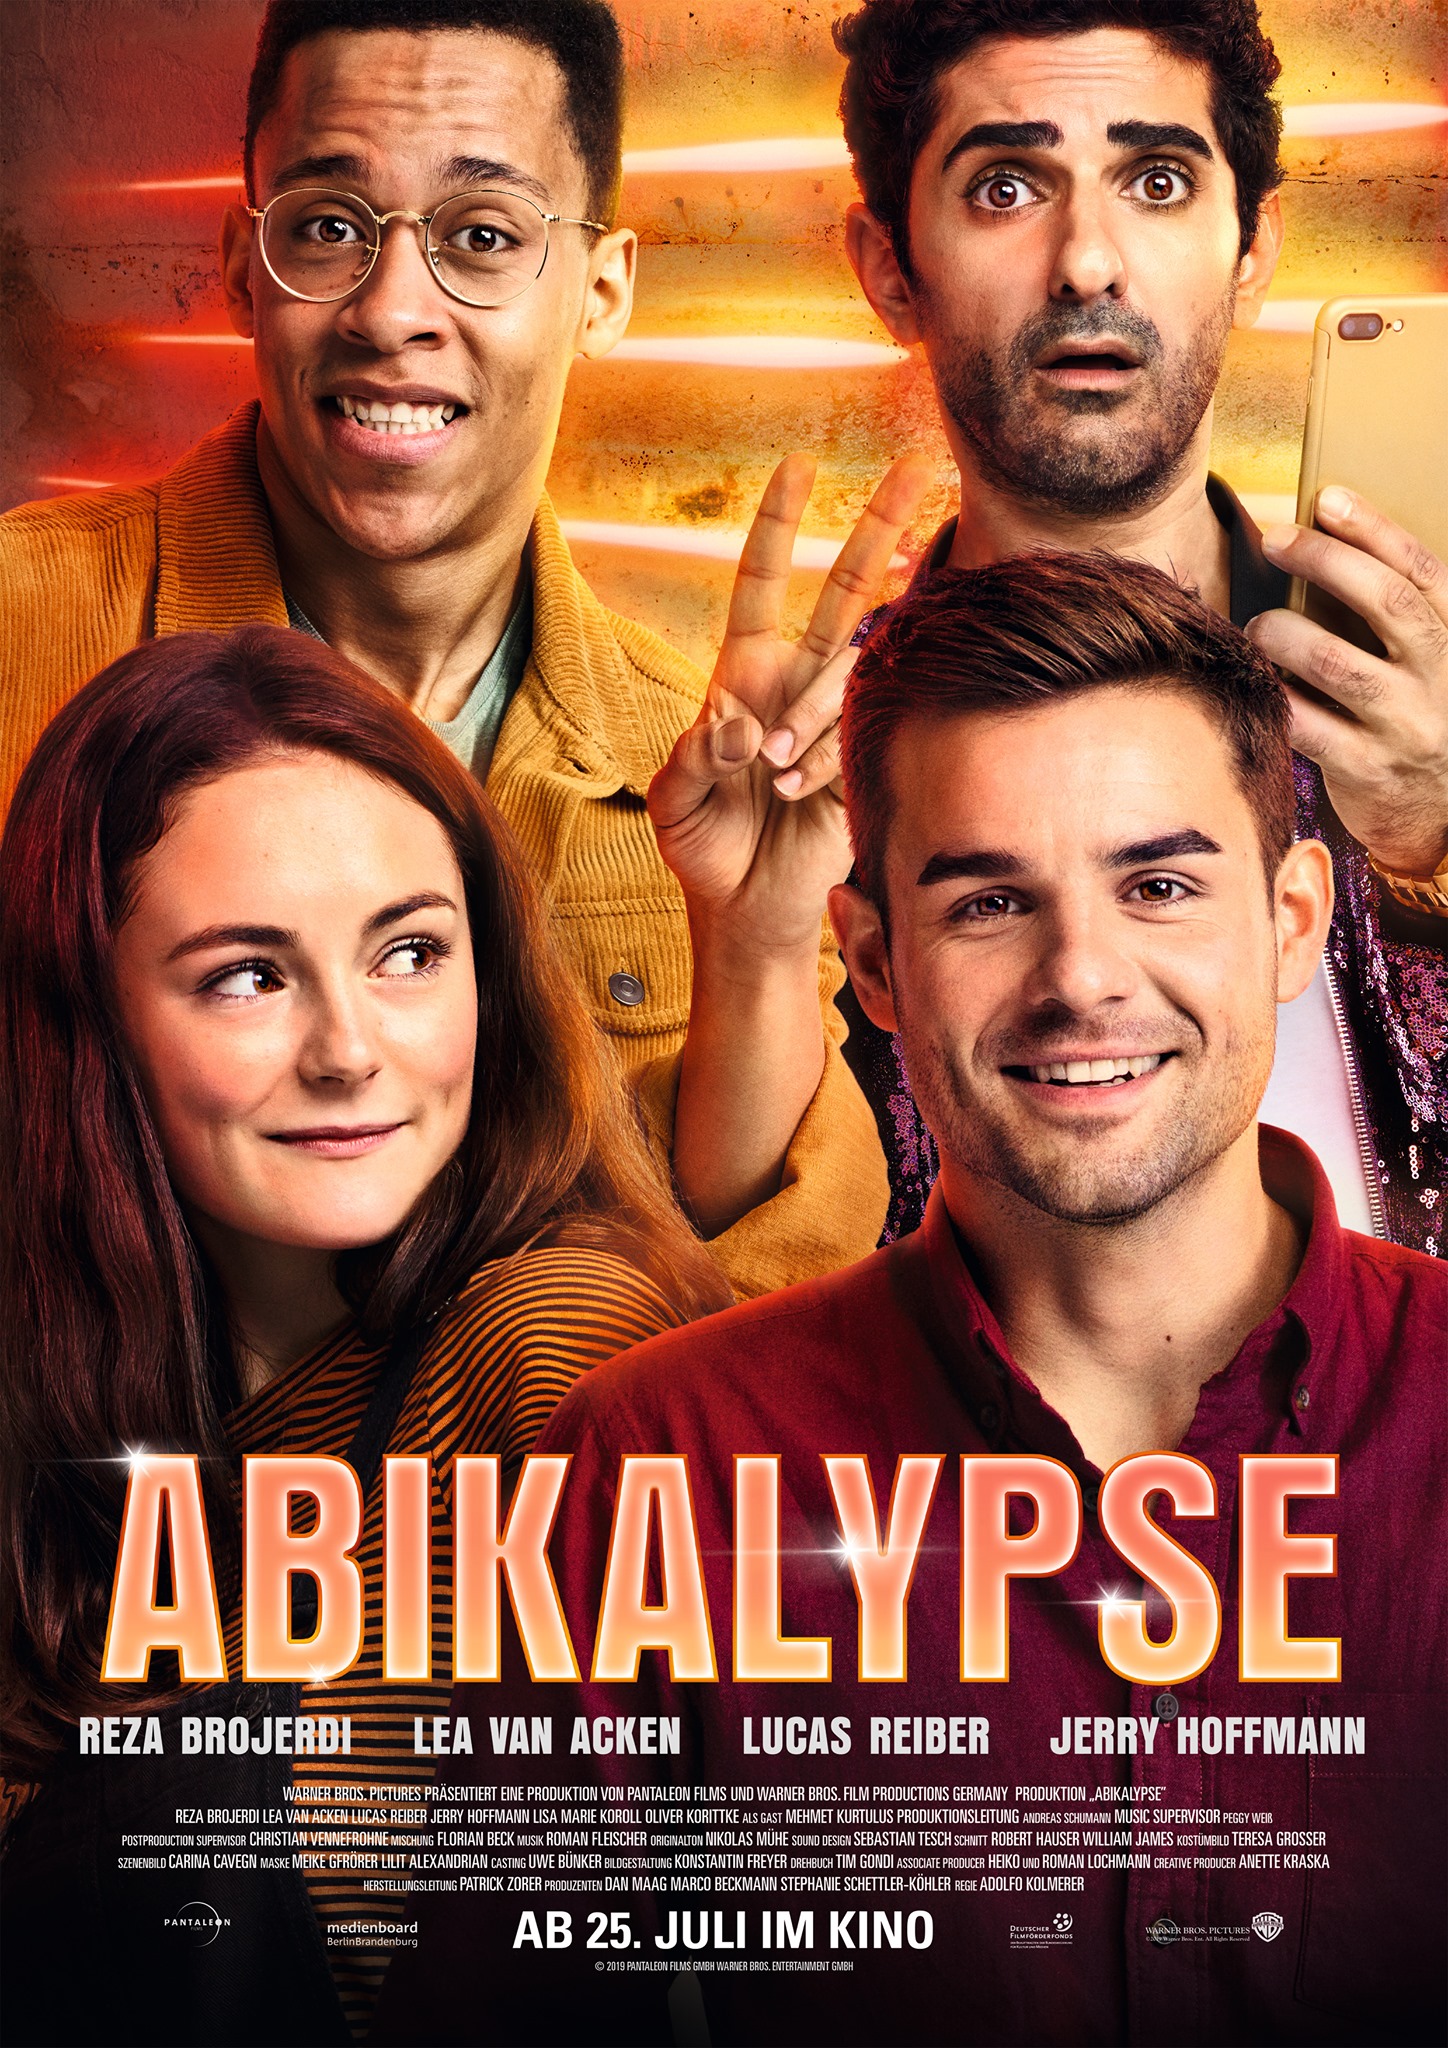 Abikalypse Film 2019 Trailer Kritik Kino De